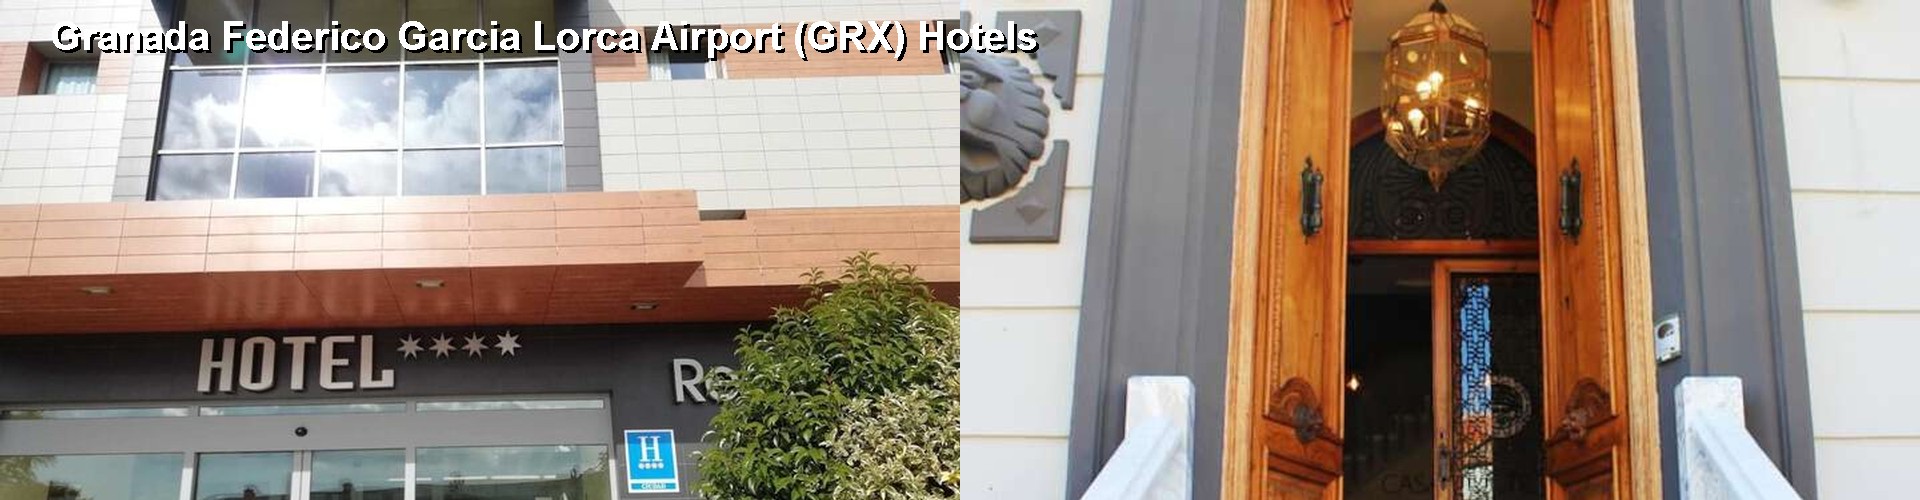 5 Best Hotels near Granada Federico Garcia Lorca Airport (GRX)